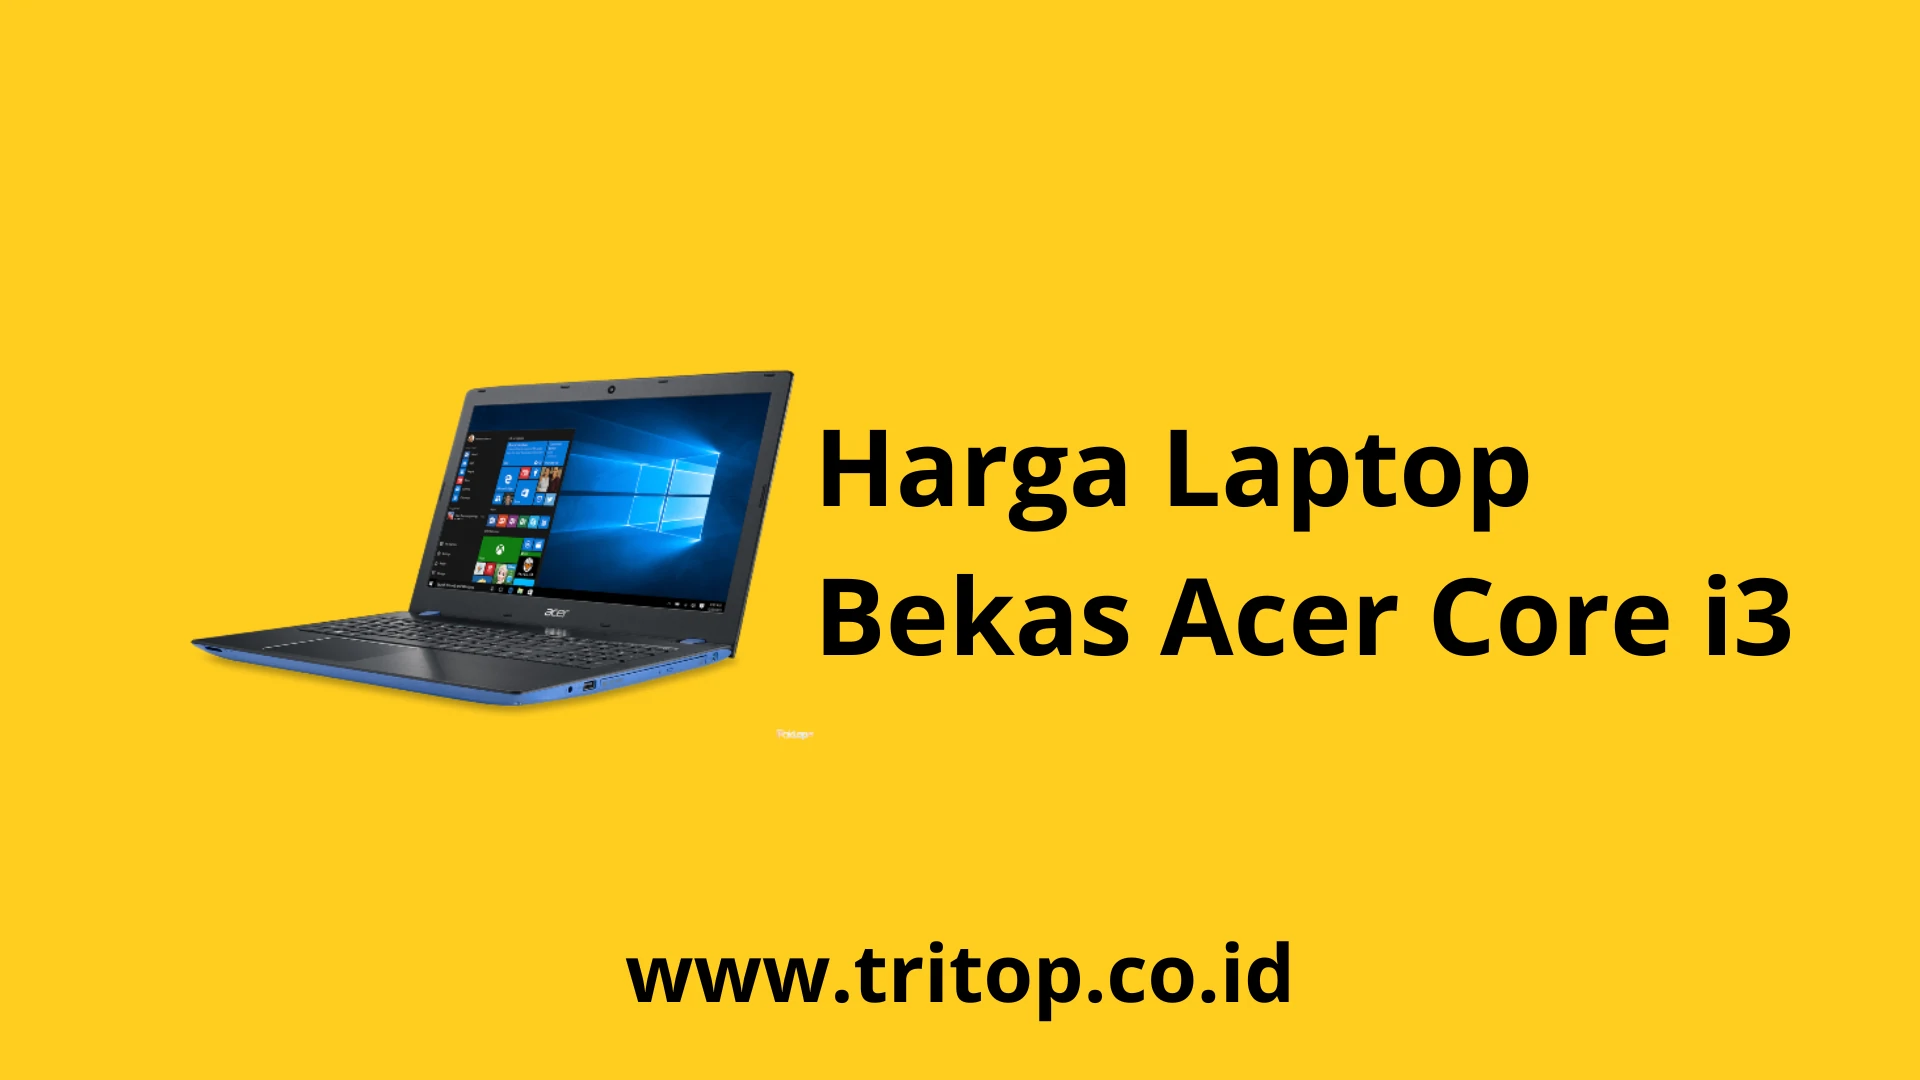 Harga Laptop Bekas Acer Core i3 Tritop.co.id